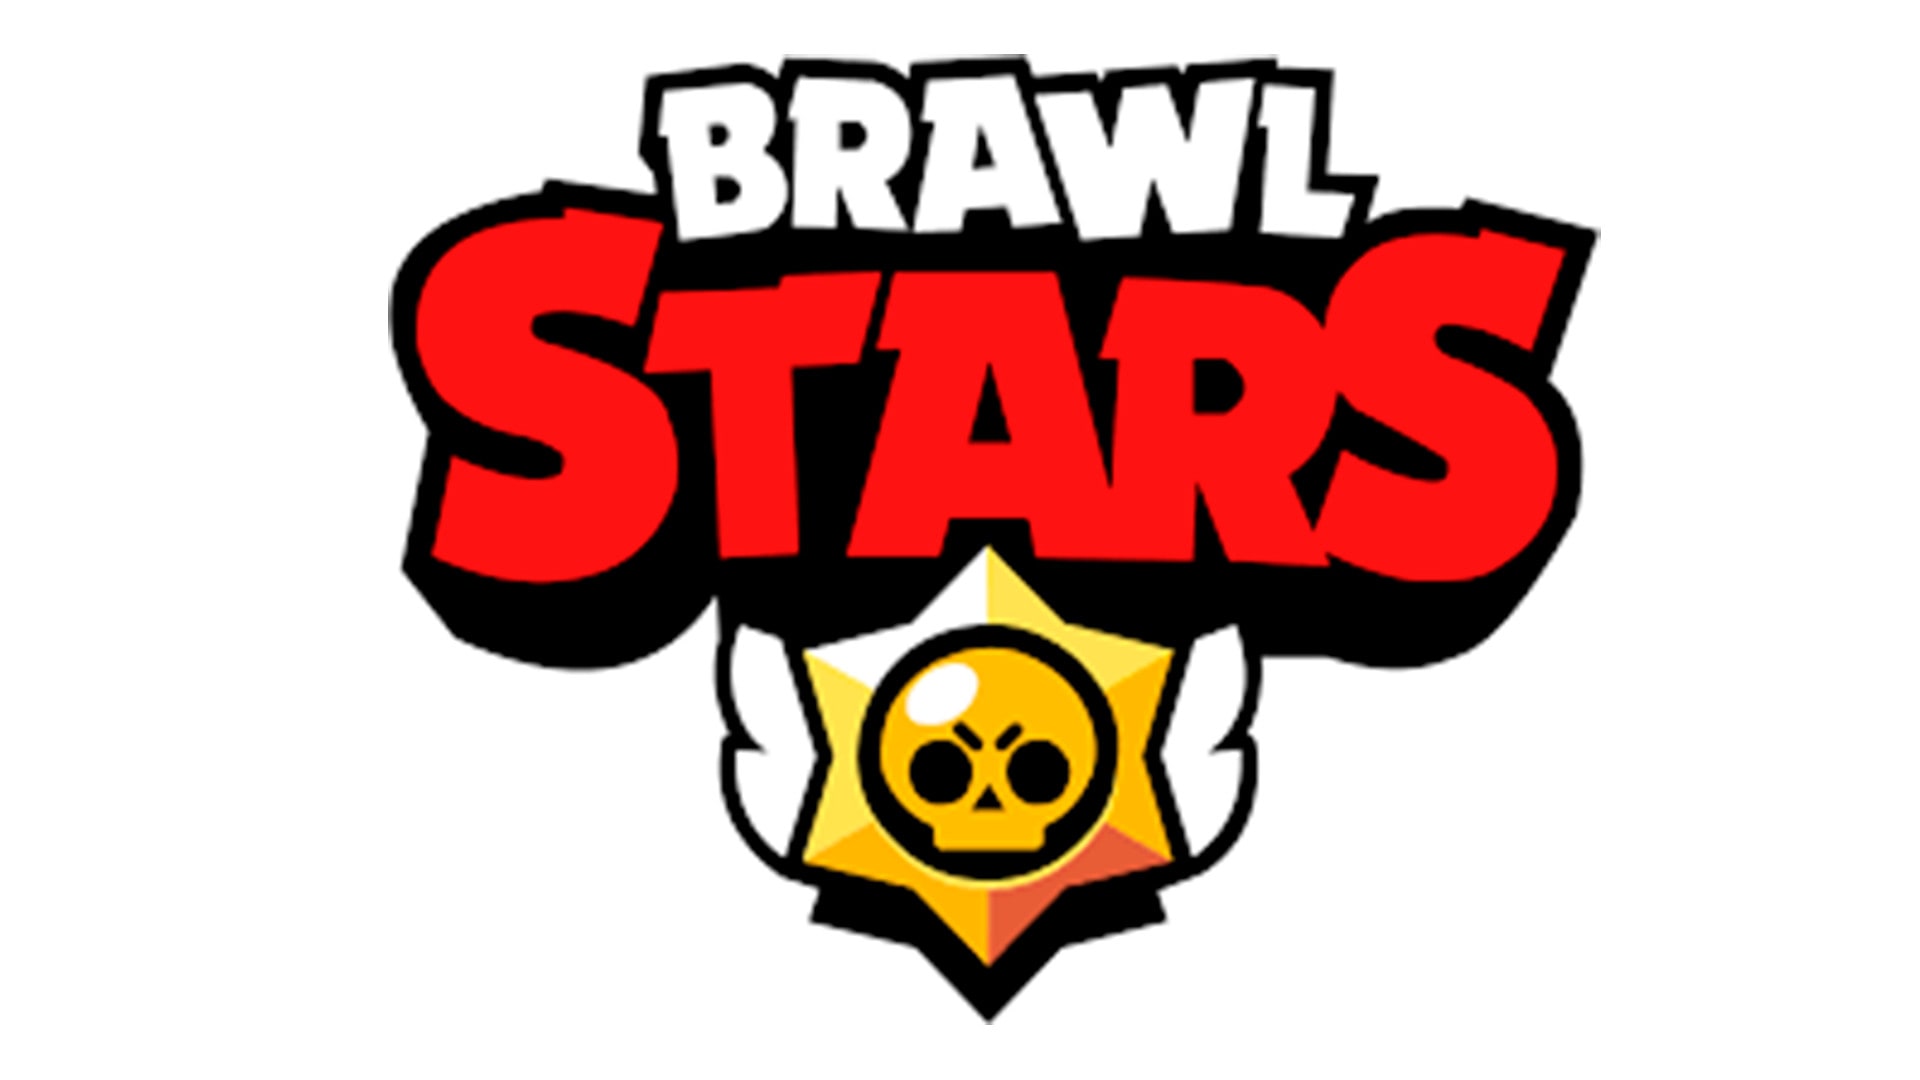 Subire Tus Copas De Brawl Stars By Moises 97 Fiverr - tag subiendo copas brawl stars